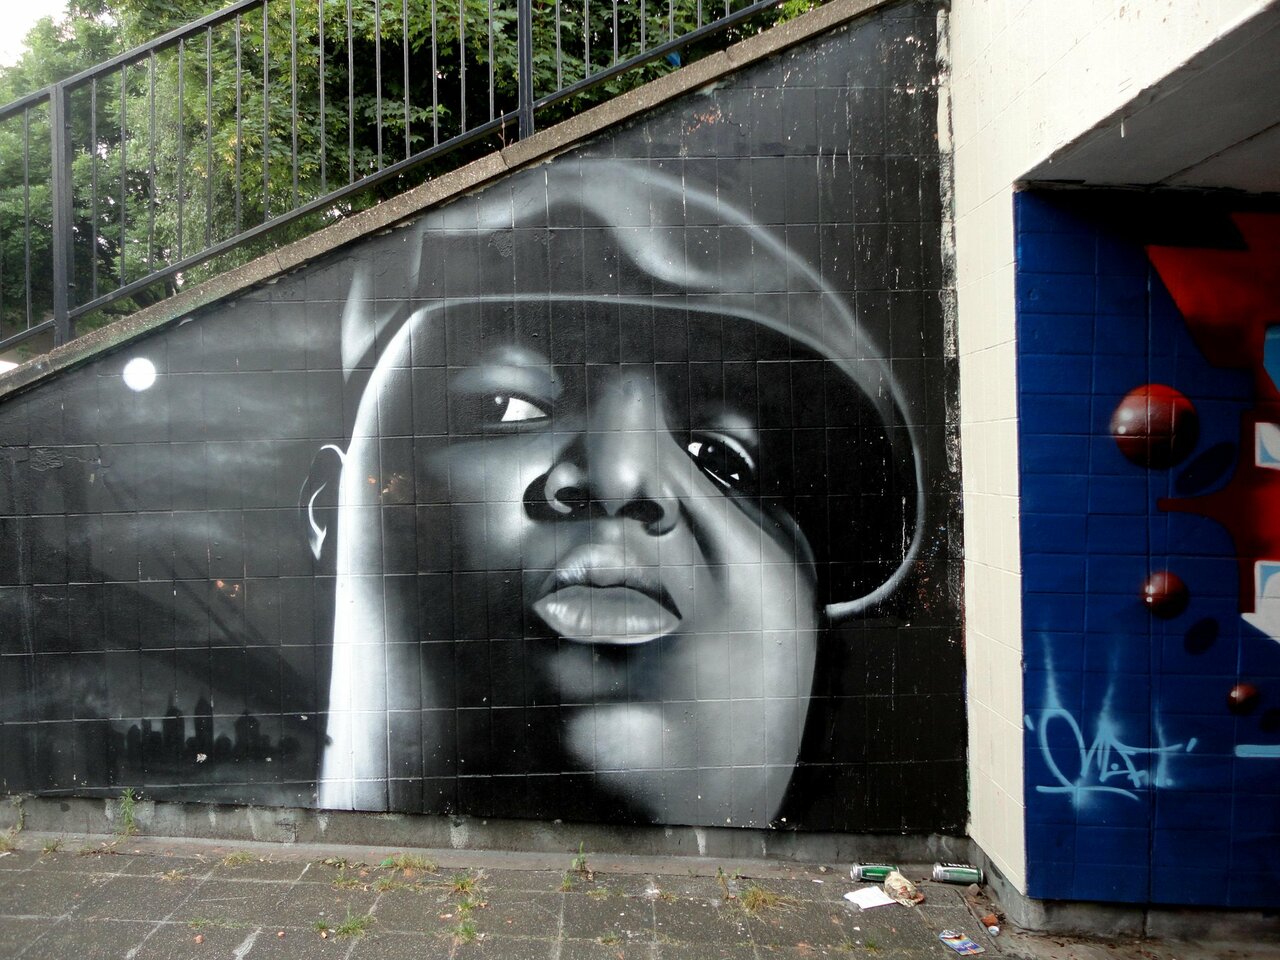 Biggie by Omega

#graffiti #graff #mural #Birmingham #art #arte #streetart #Notorious #tribute http://t.co/jGDWjHpiFd